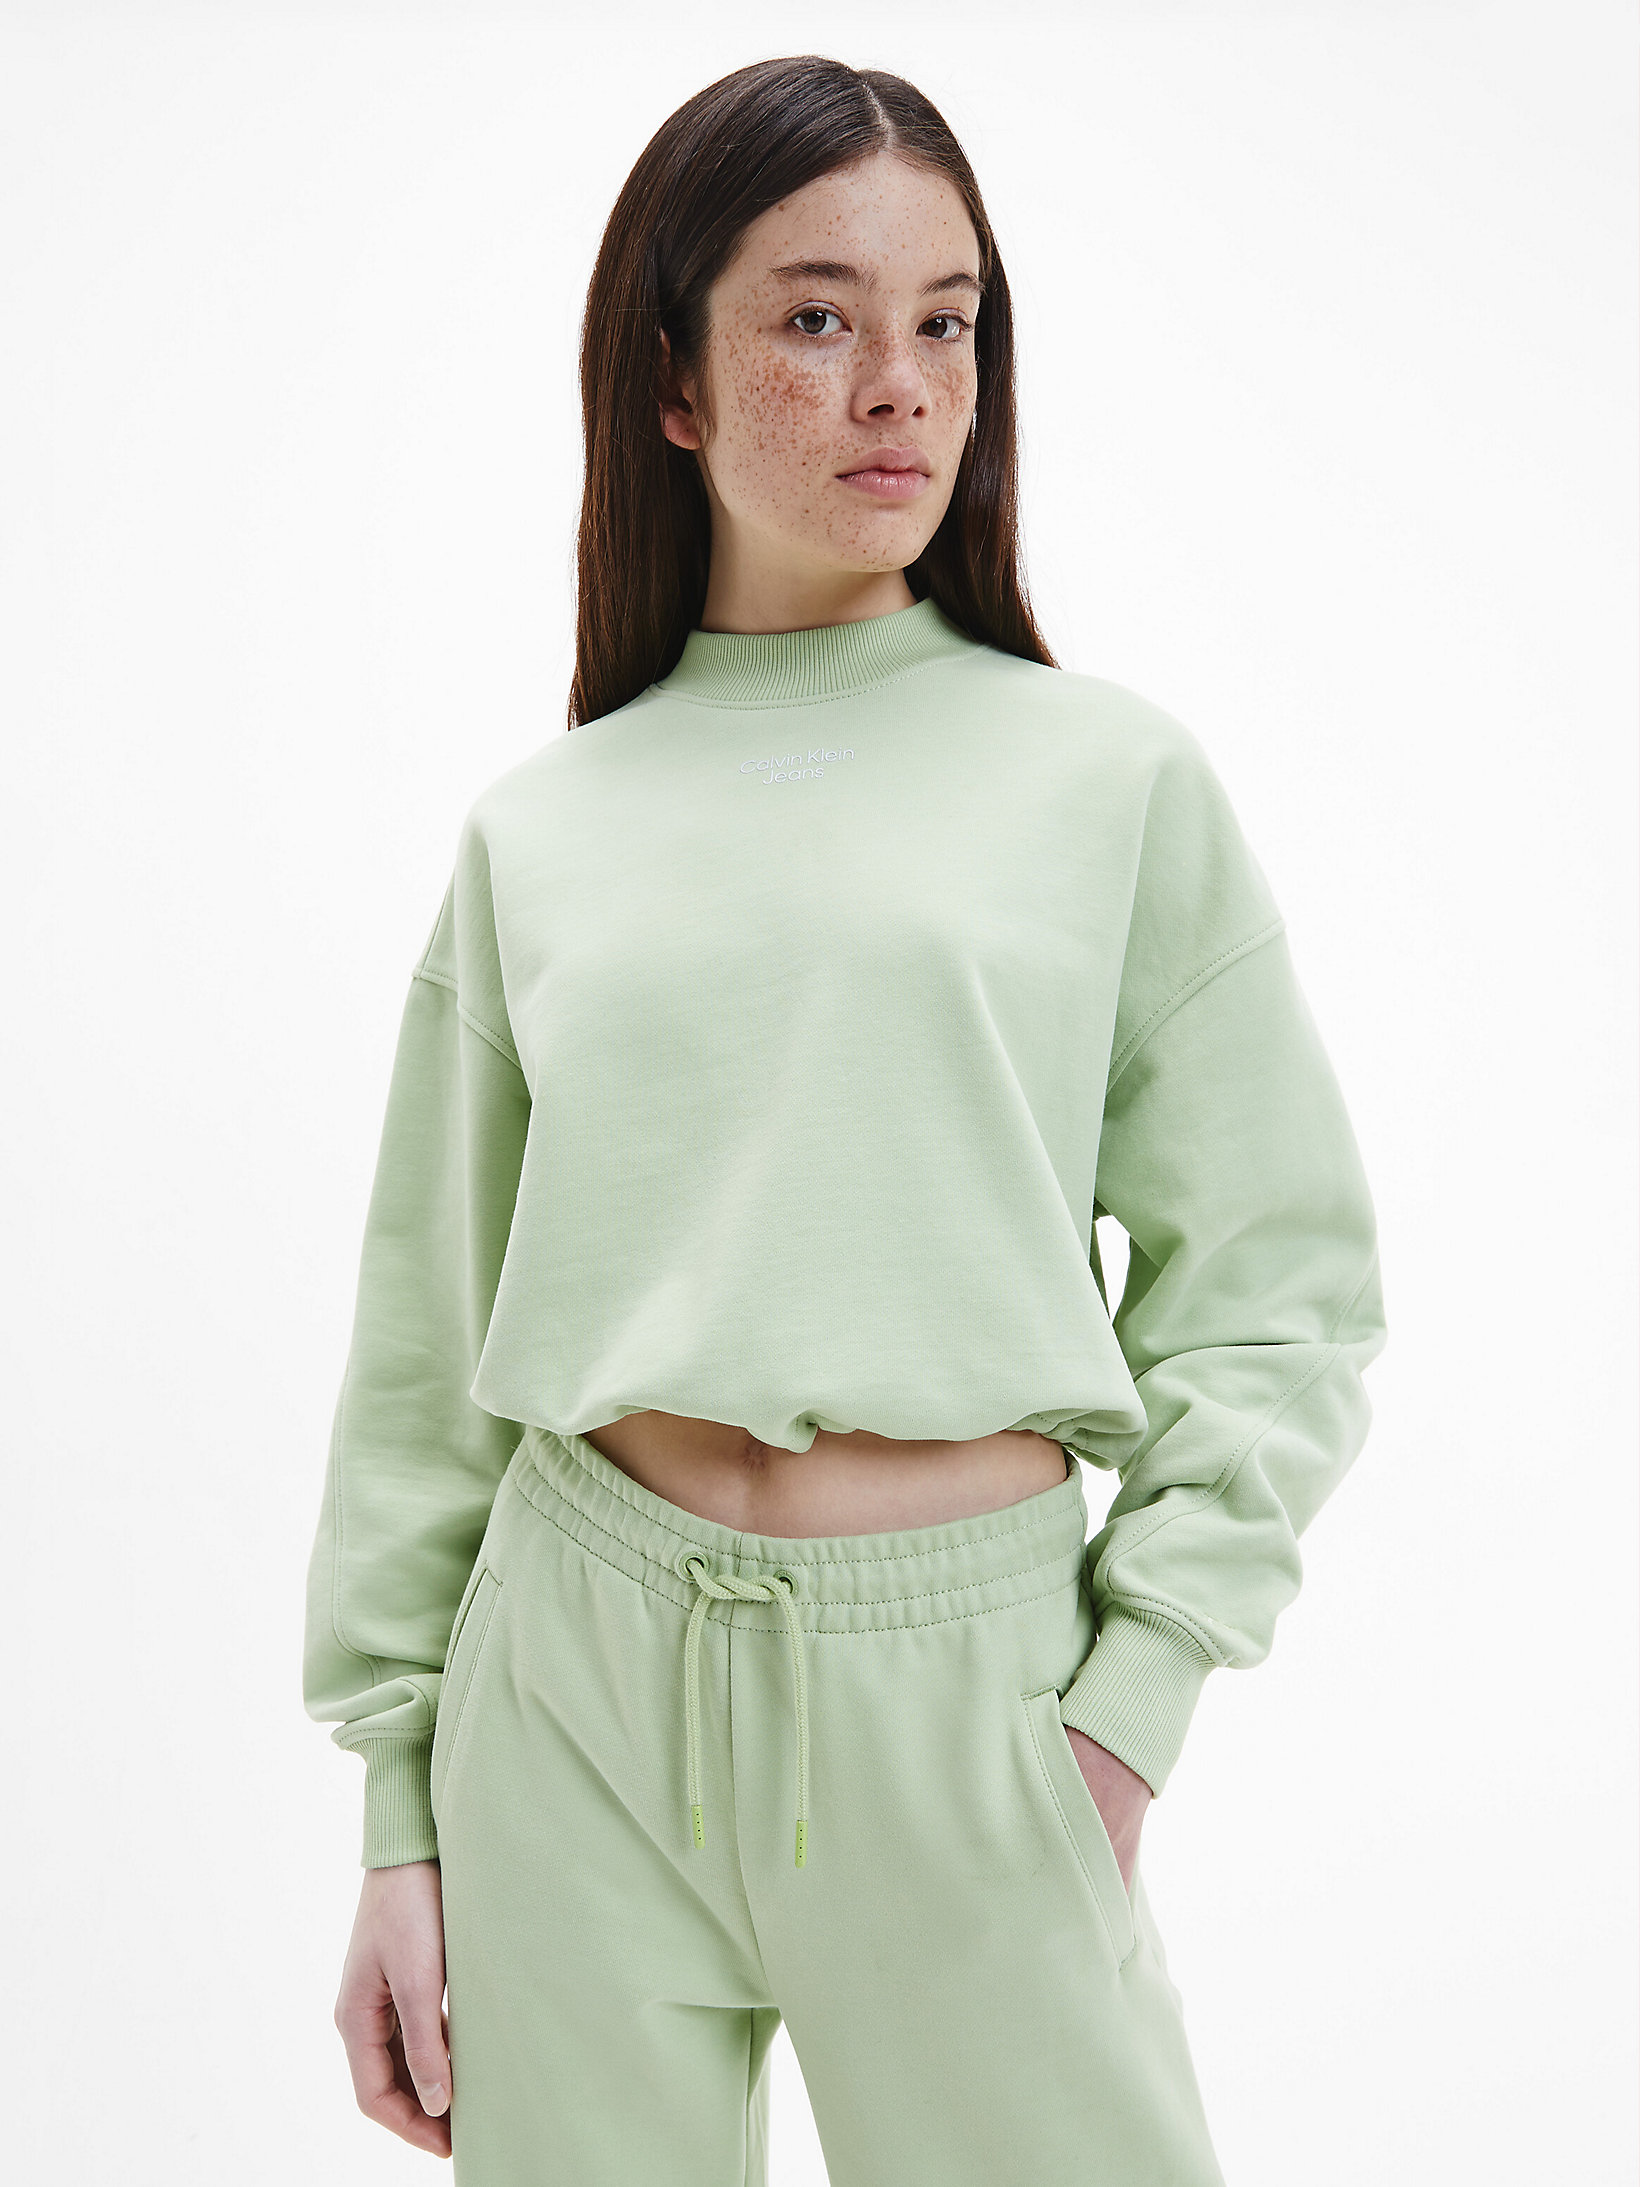 Jaded Green Relaxed Drawstring Sweatshirt undefined women Calvin Klein